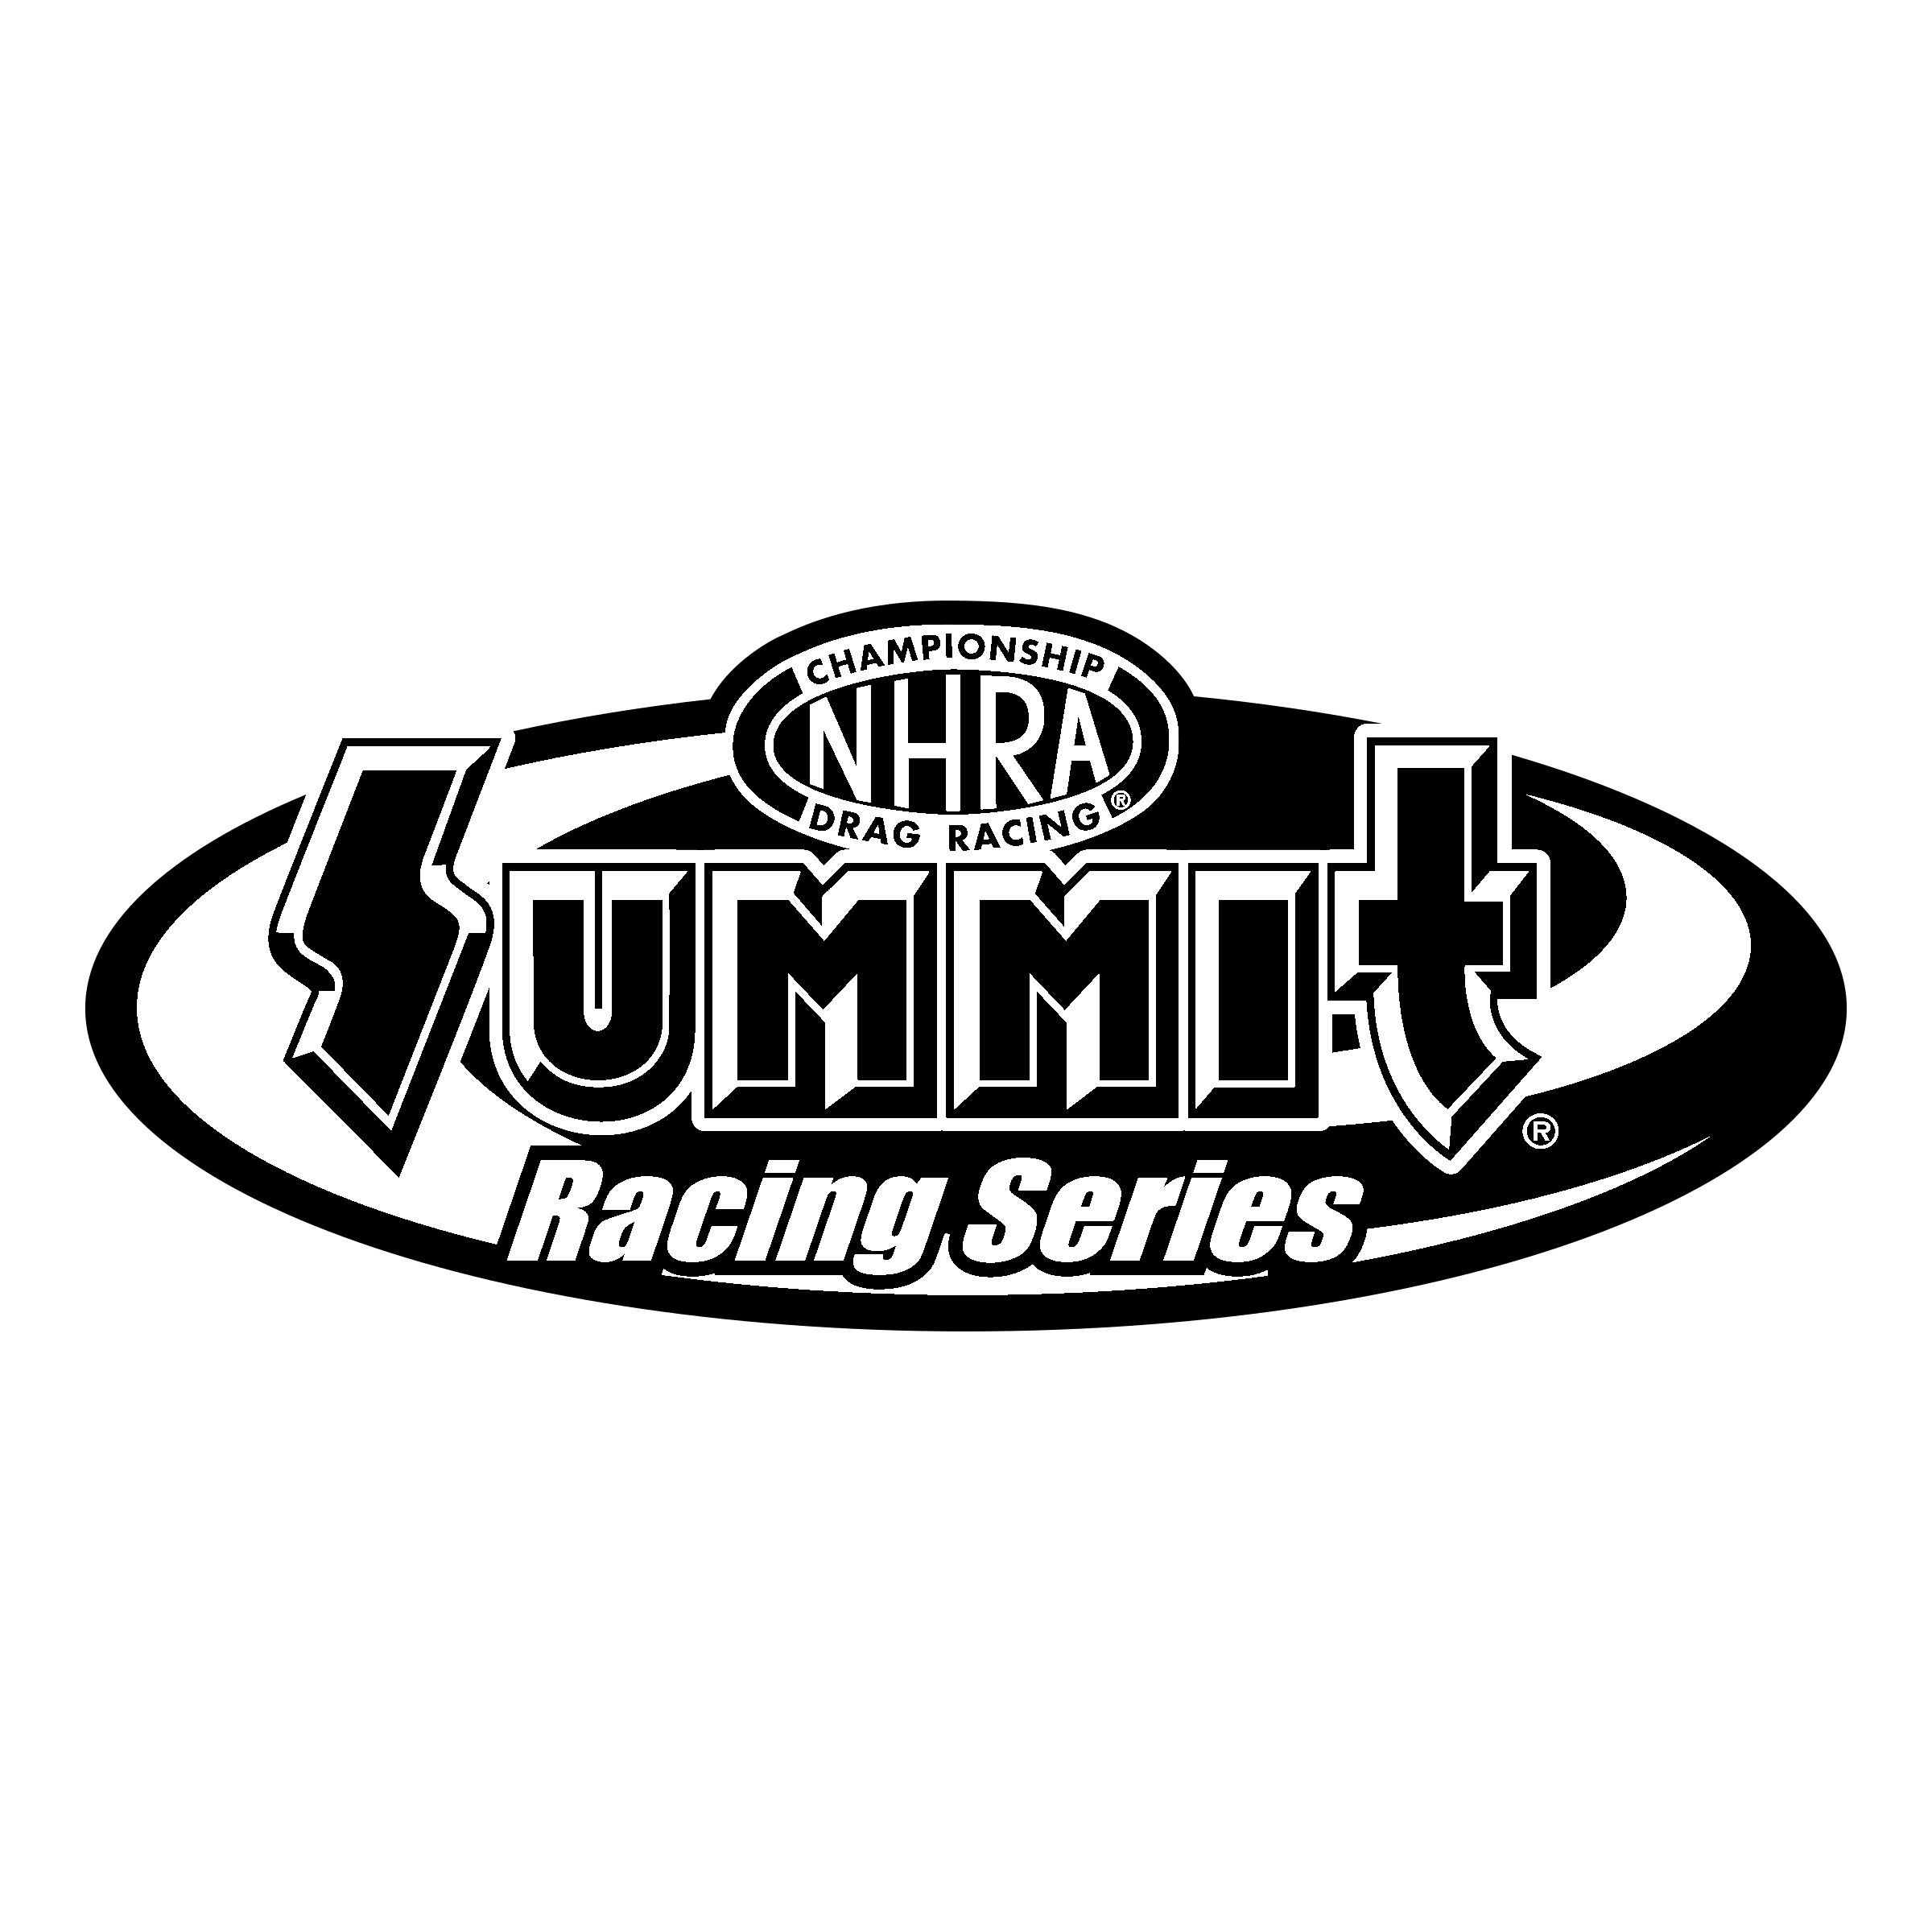 Summit Racing Logo - Summit Racing Series Logo PNG Transparent & SVG Vector - Freebie Supply